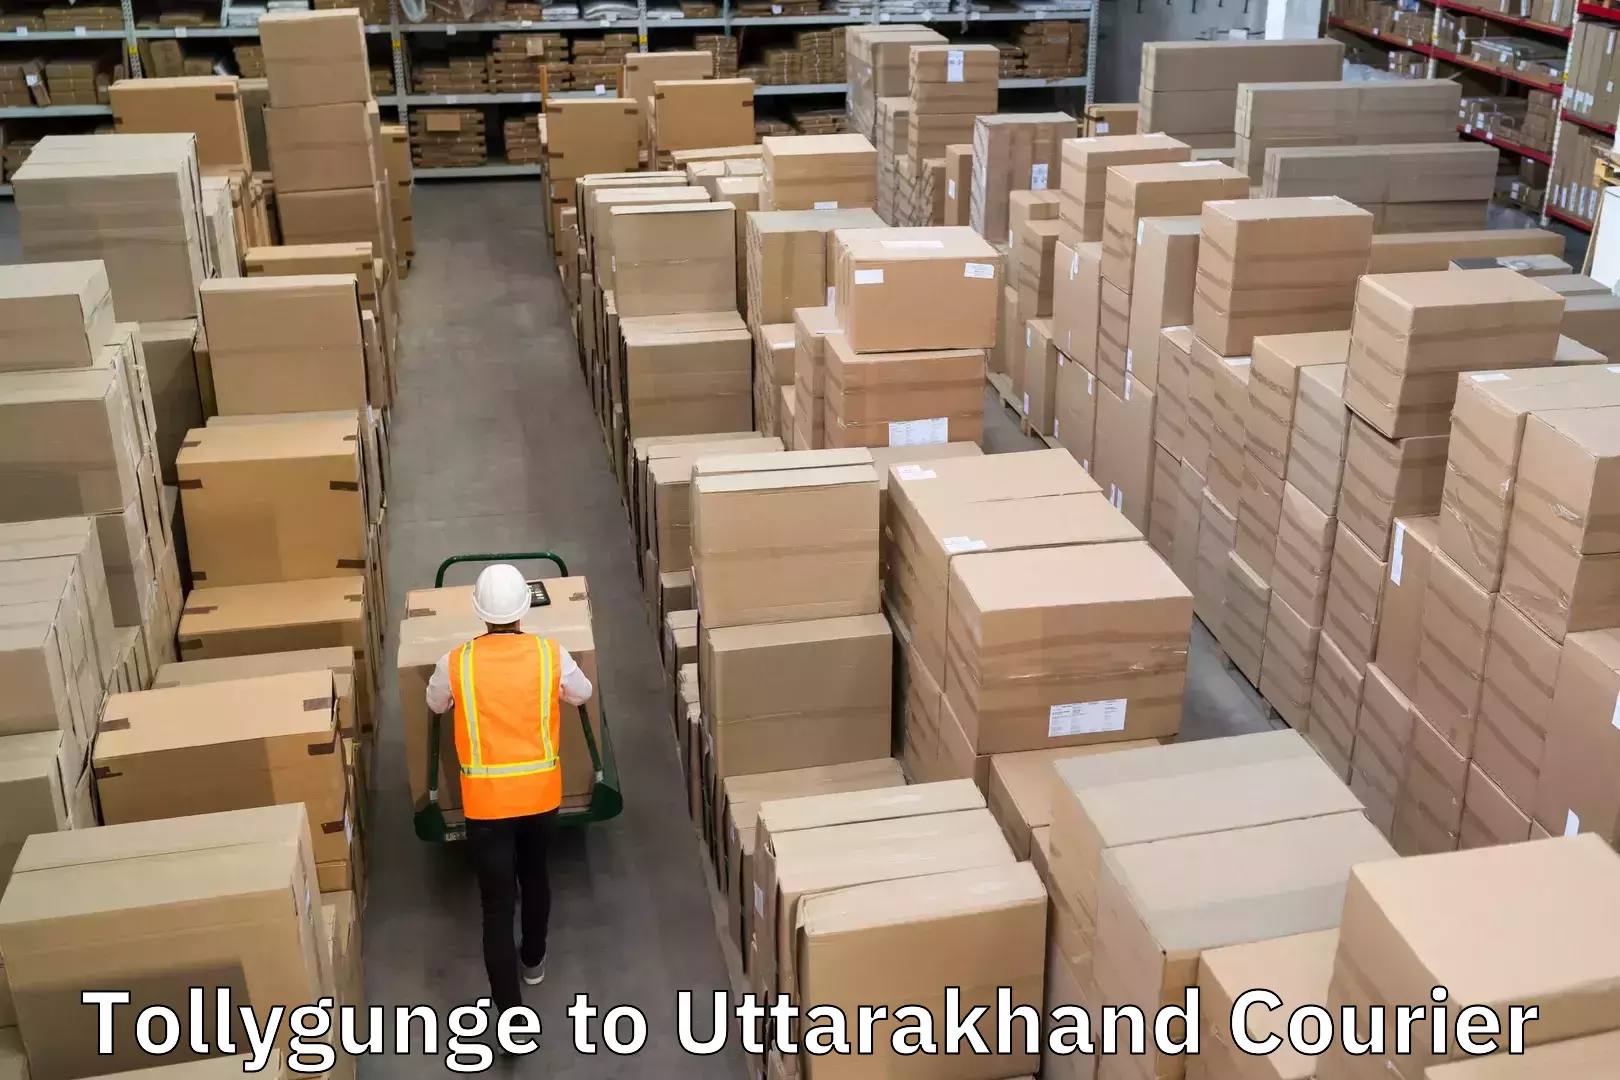 Courier service partnerships Tollygunge to Uttarakhand